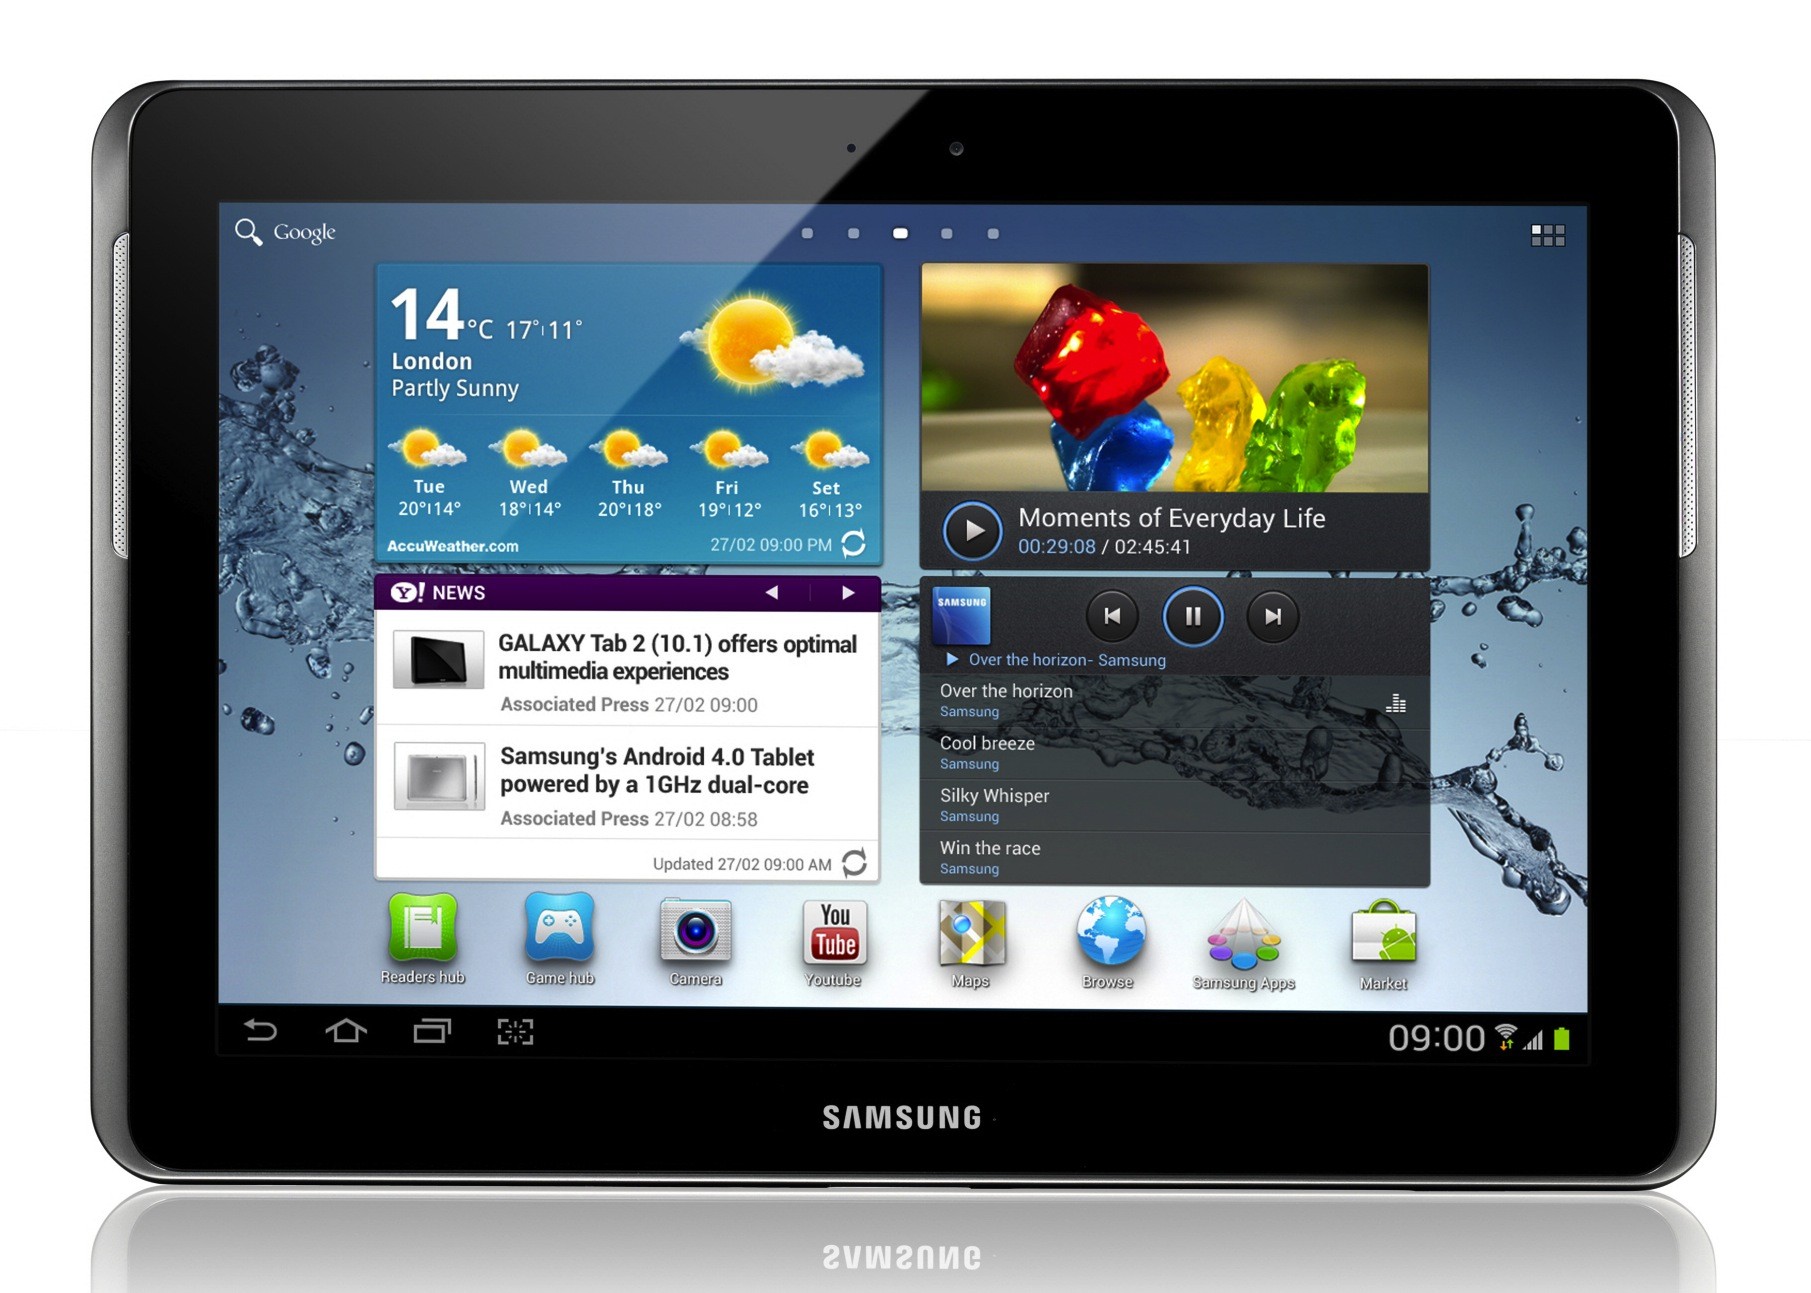 Samsung Galaxy Tab 2 10.1 (Wi-Fi + 3G) in offerta a 359€ da MarcoPolo (solo per oggi)